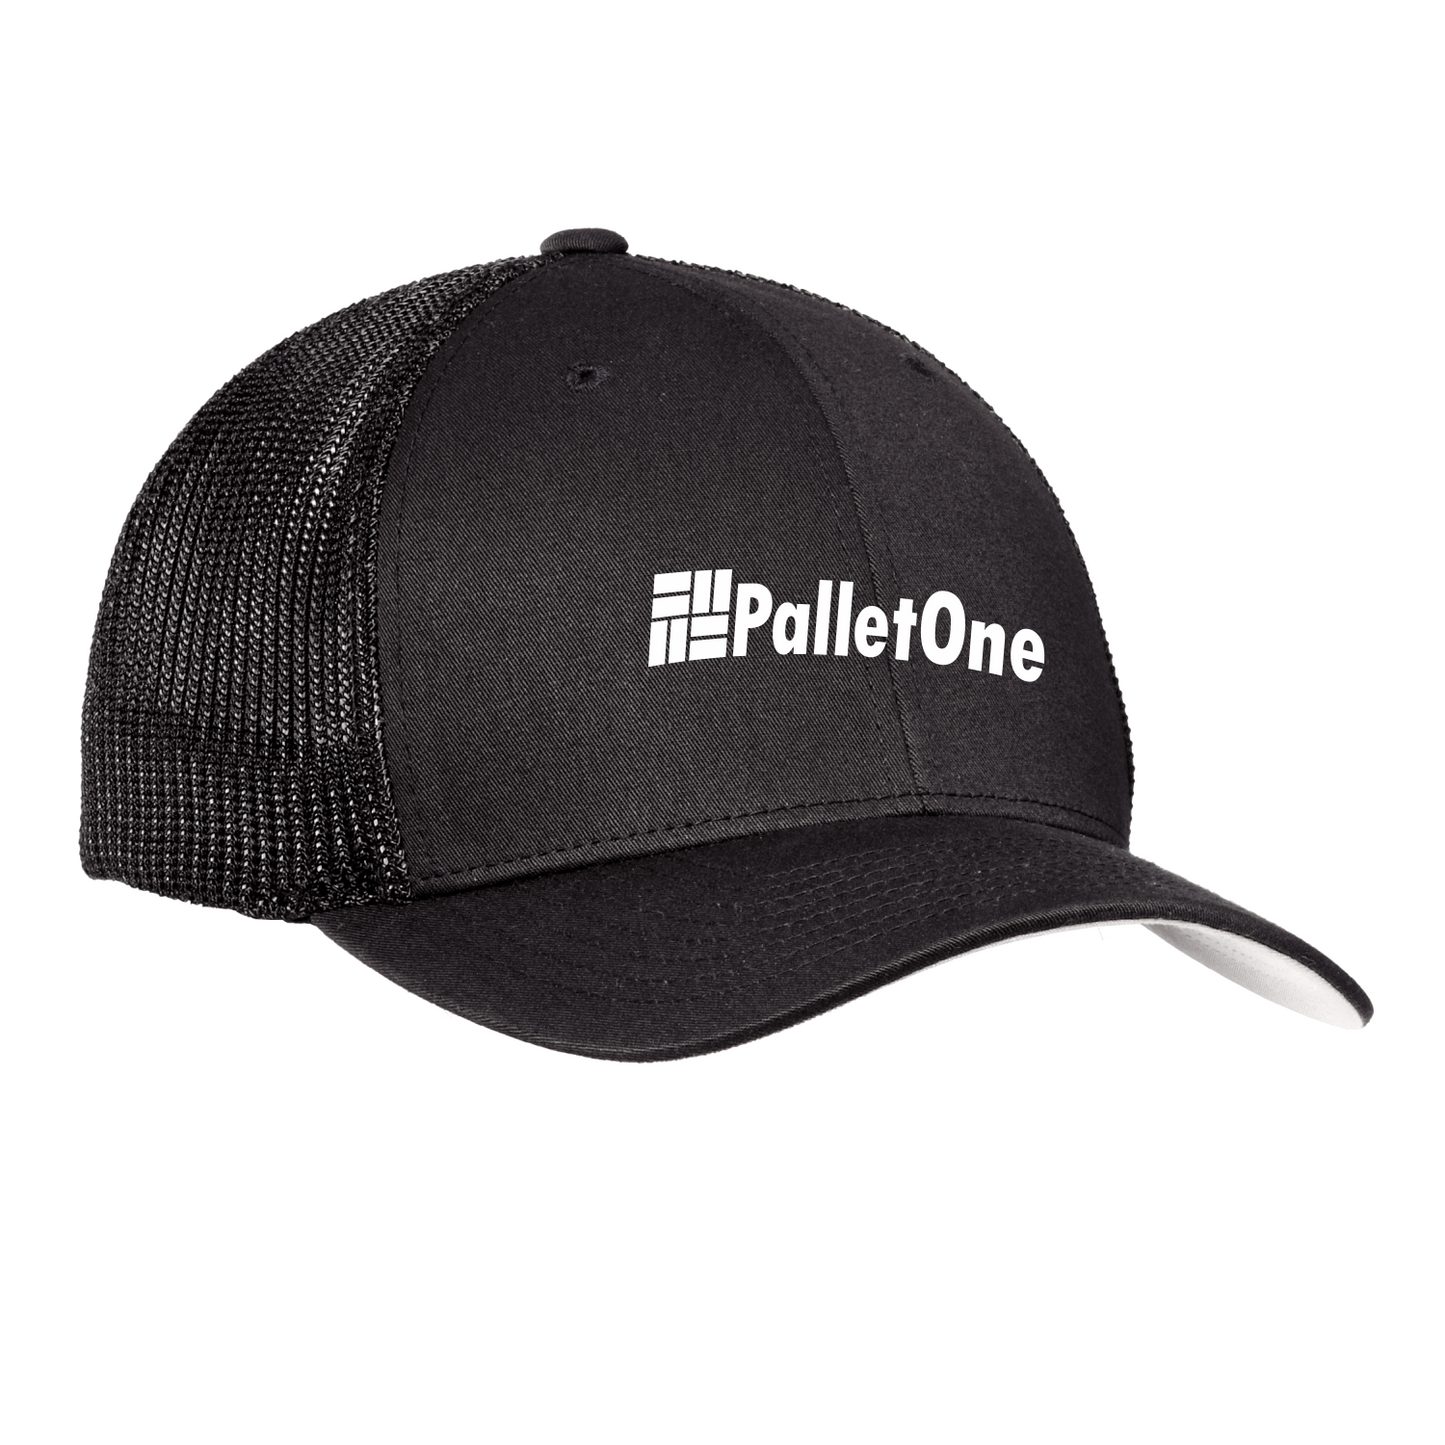 PalletOne - Flexfit Mesh Back Cap - Black